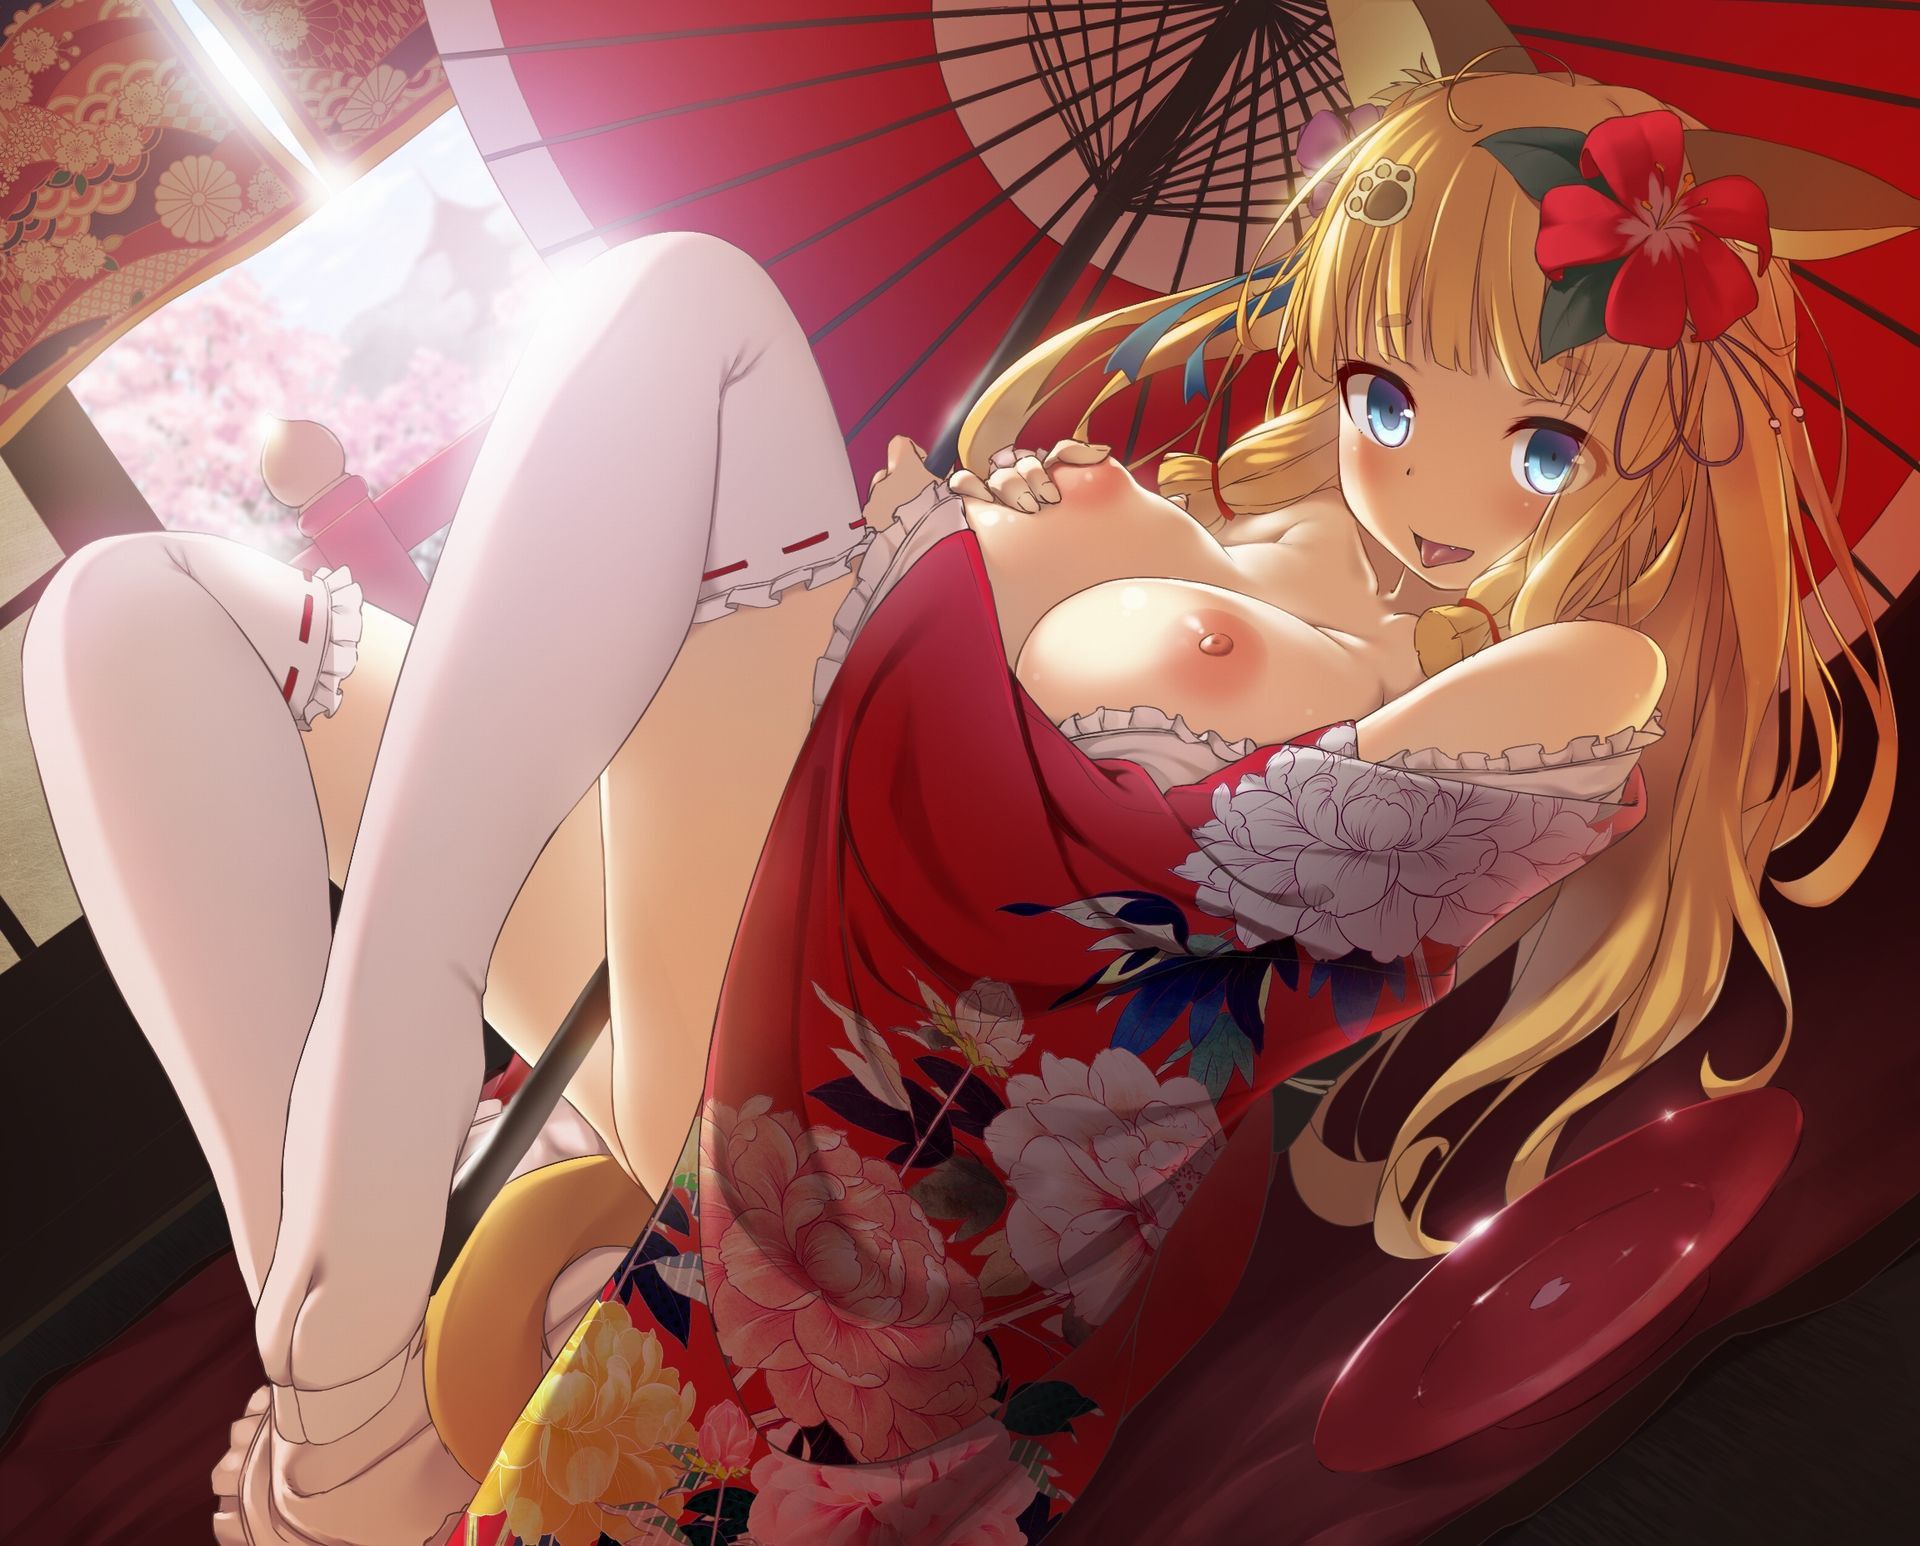 [2nd] The disturbed kimono figure is erotic erotic girl secondary erotic image part 18 [Kimono] 26